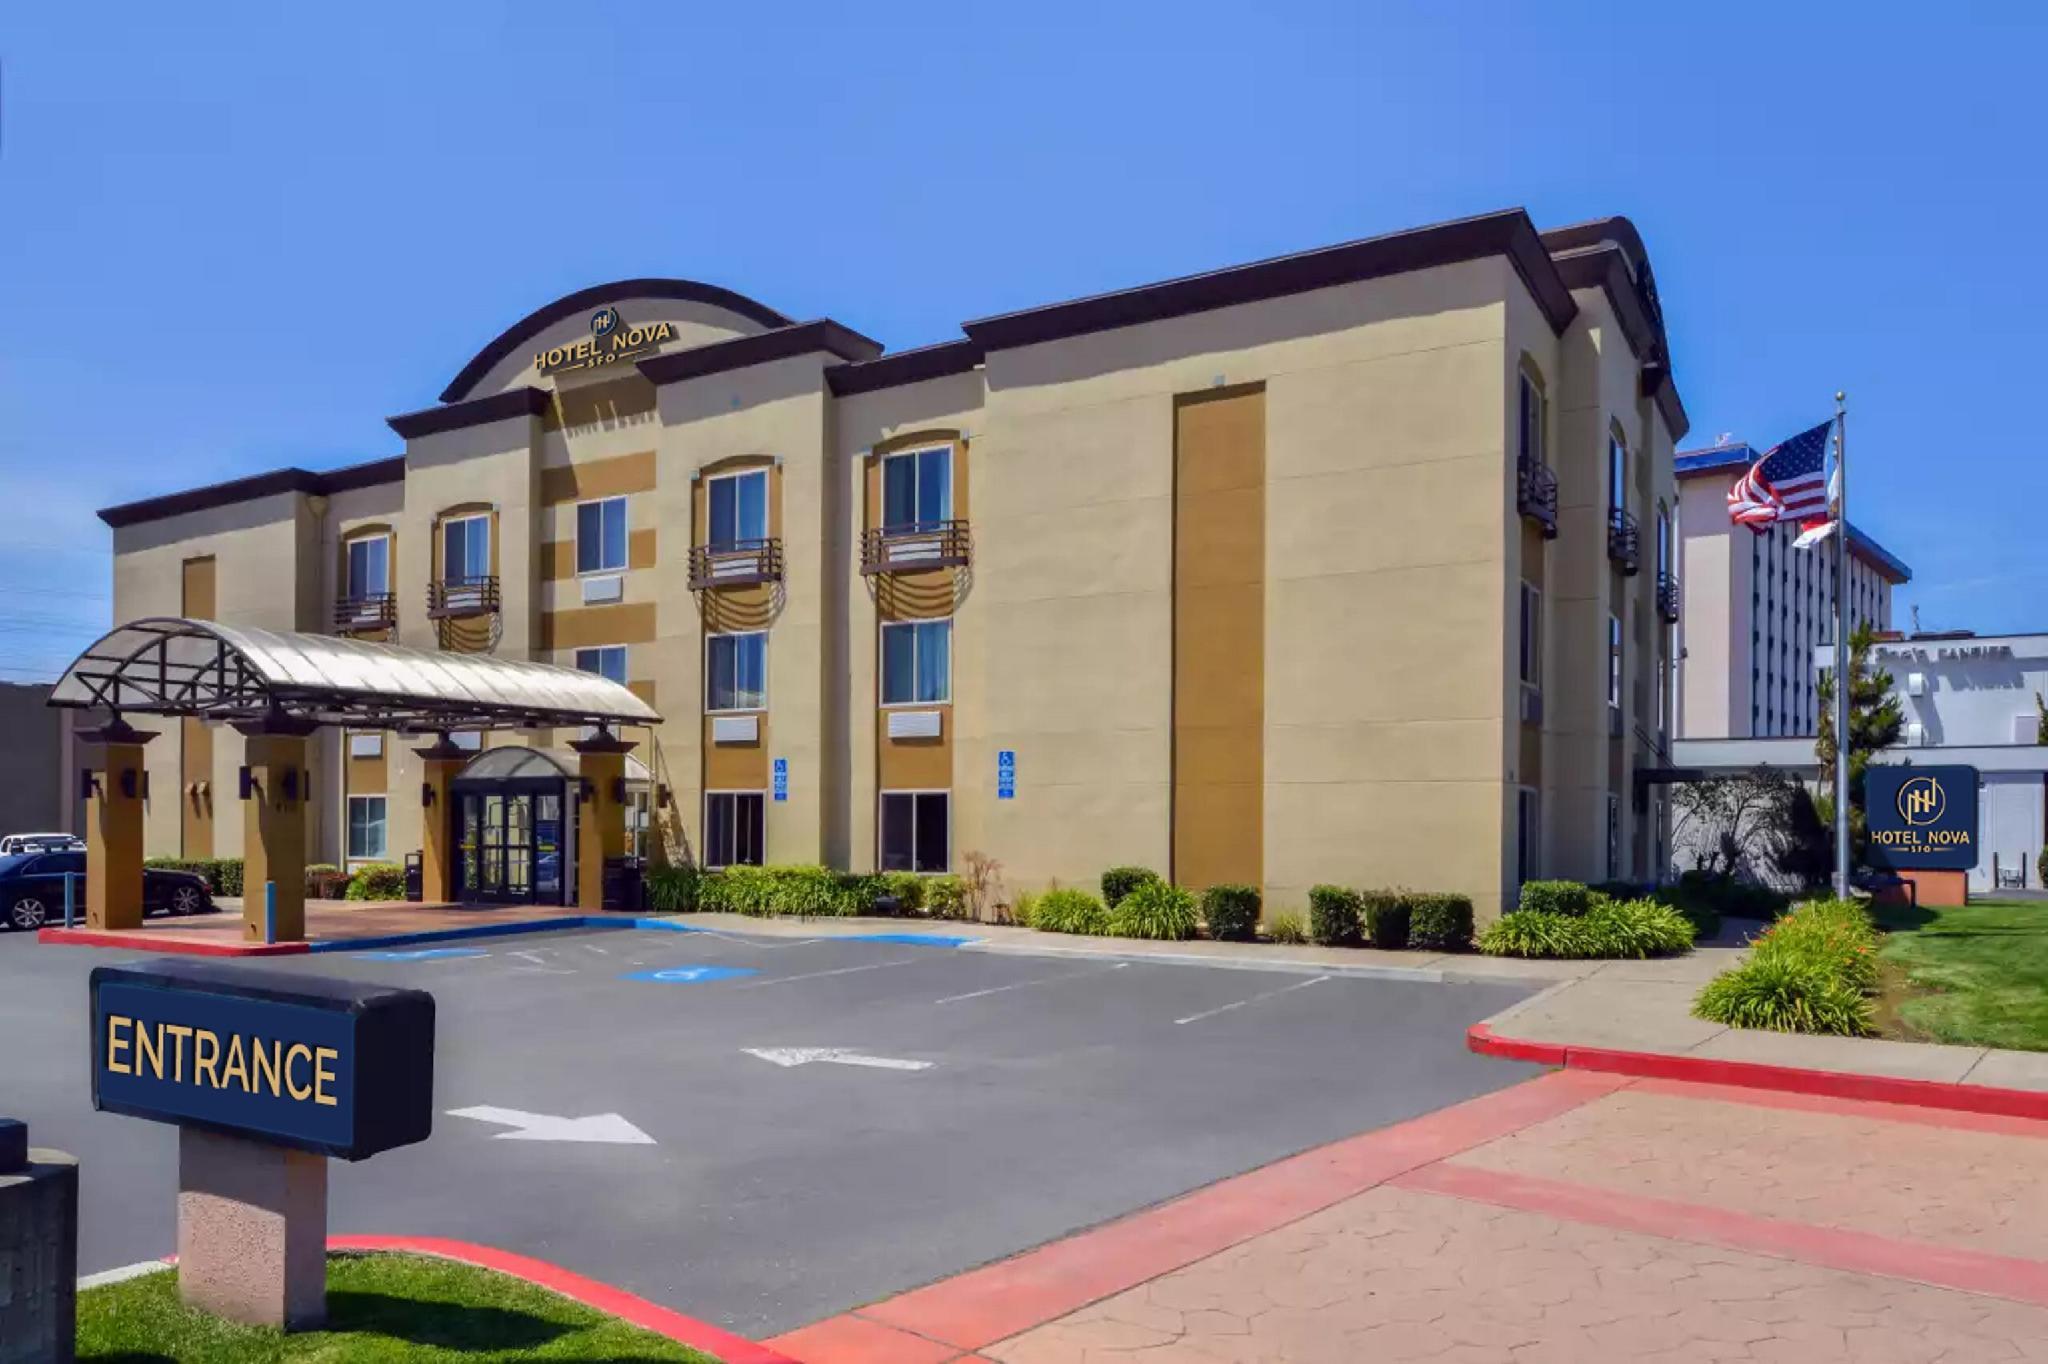 Hotel Nova Sfo - A Fairbridge Hotel - Millbrae, CA